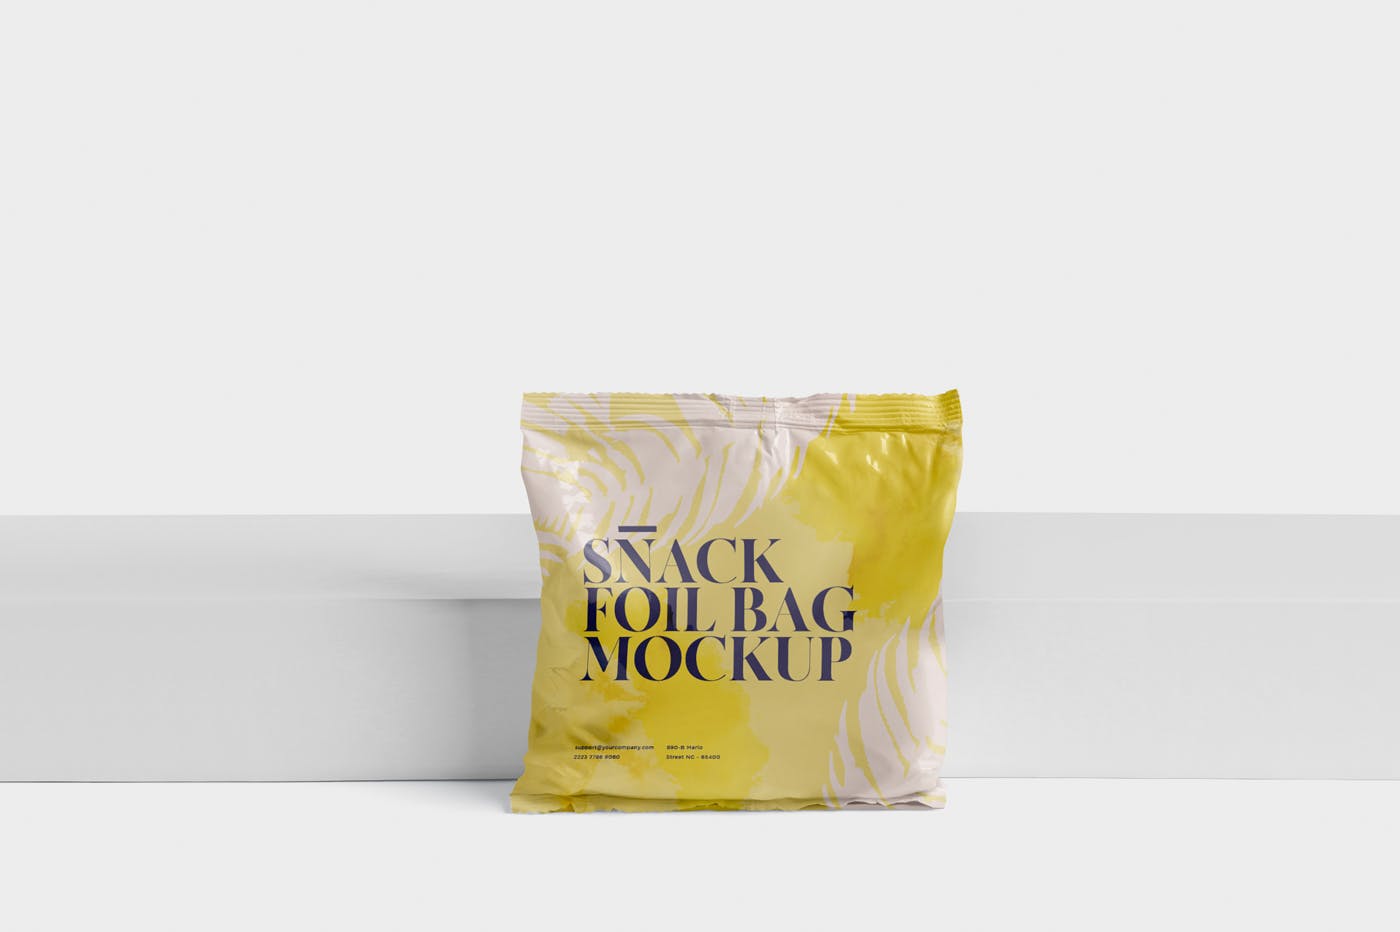 小吃零食铝箔包装袋设计图第一素材精选 Snack Foil Bag Mockup – Square Size – Small插图(3)